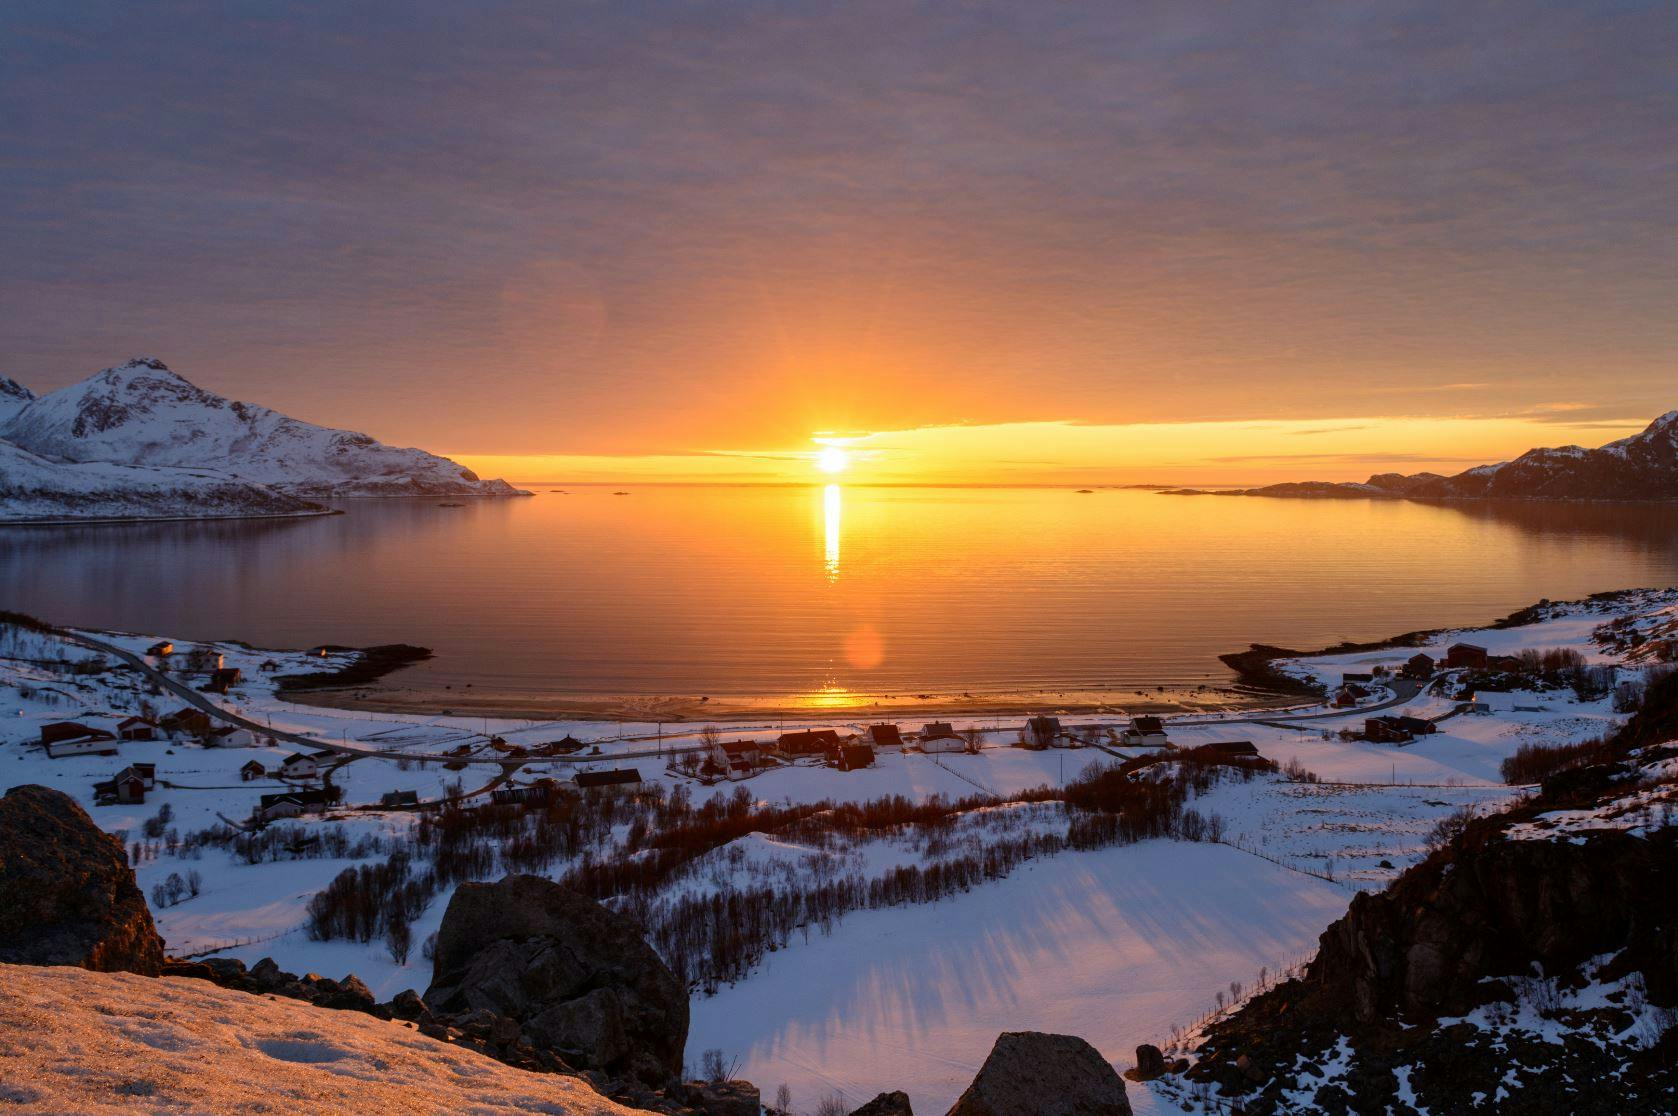 Wintertour durch den Kvaløya-Fjord